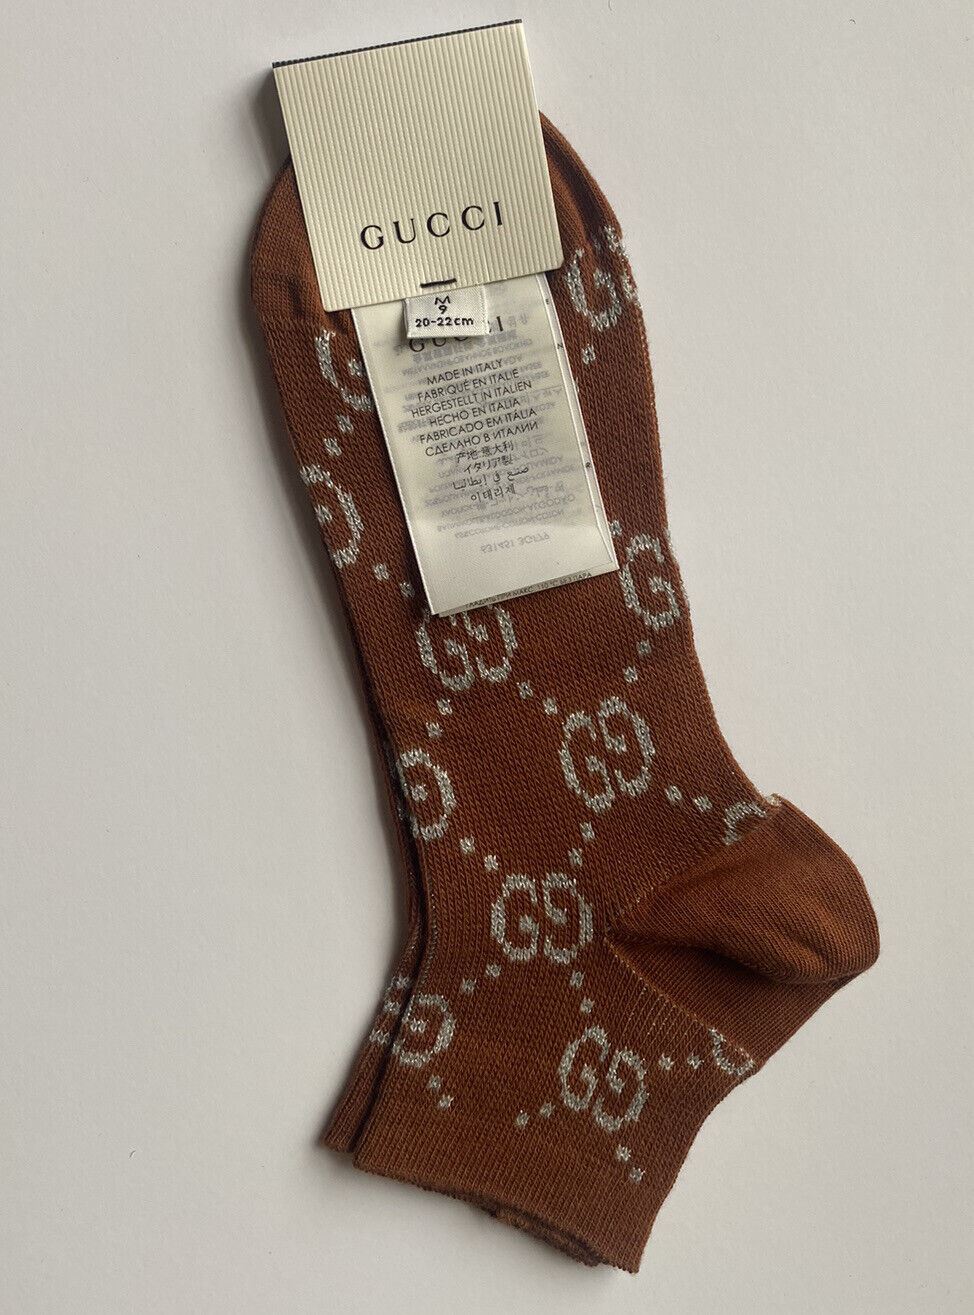 Носки NWT Gucci Mini с греческим узором GG, серебристо-коричневые, средние (размер 9) 631451 